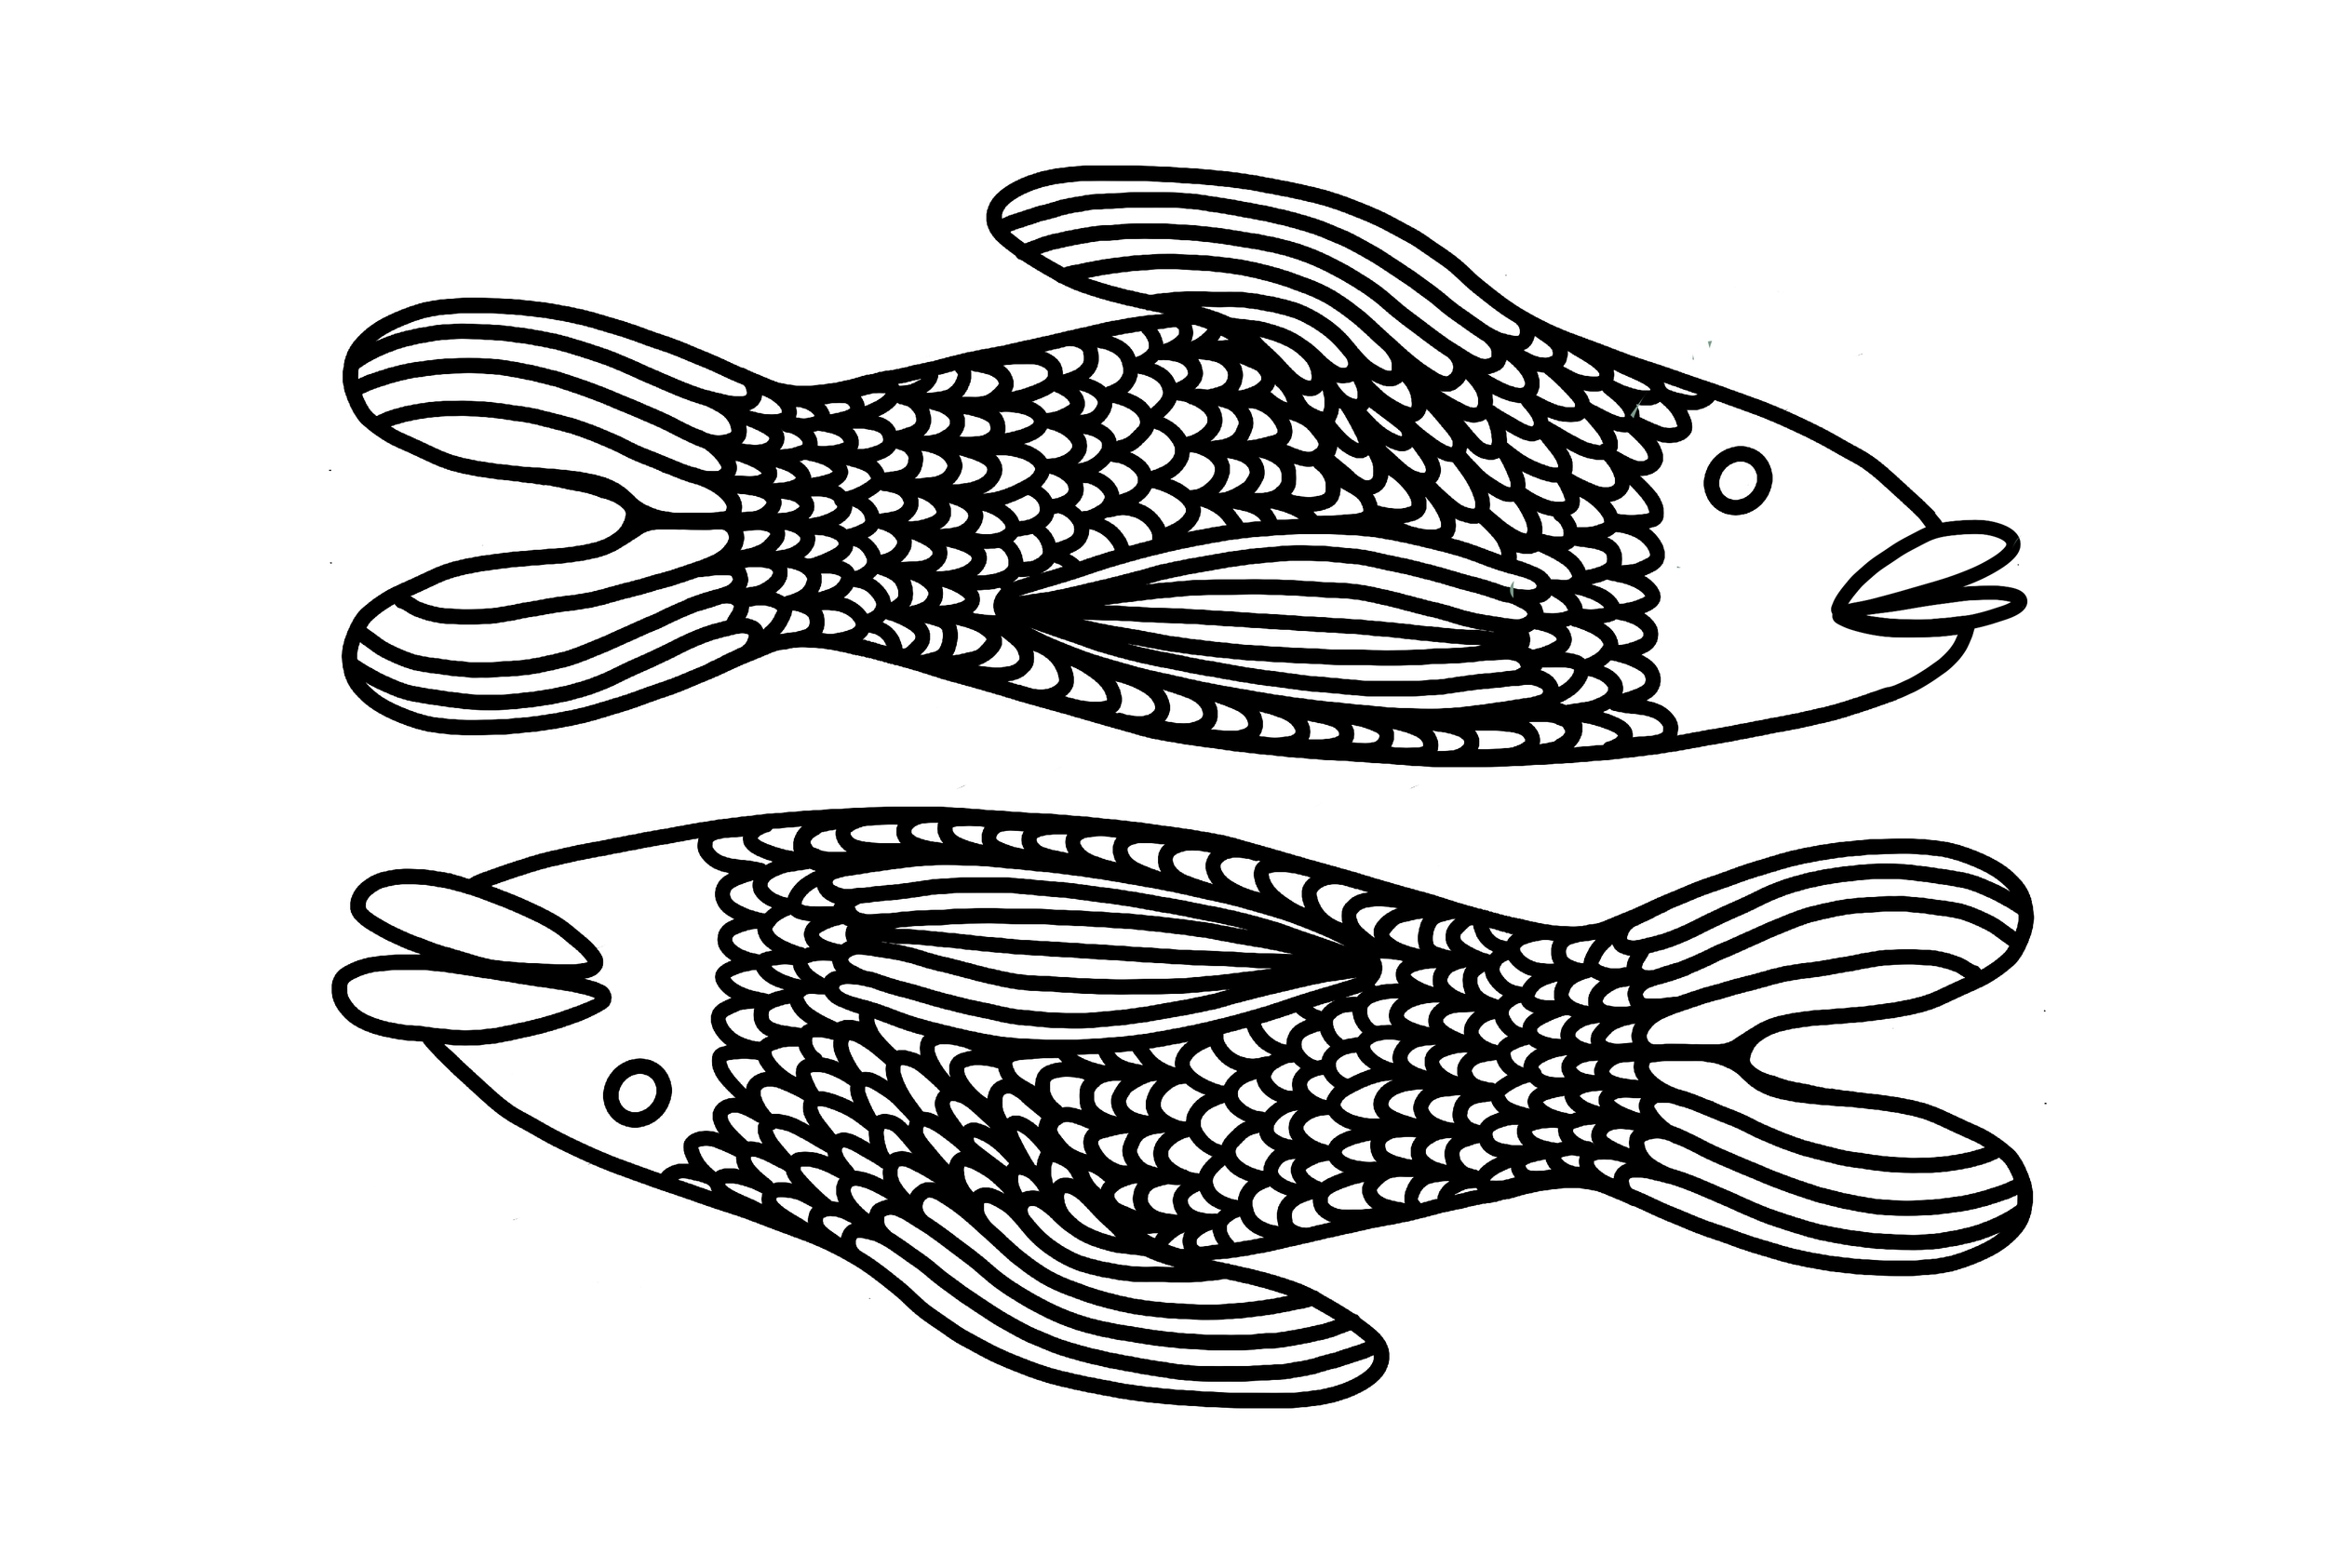 Fish Illustration Simple Sam Hanson Doodle Design.png